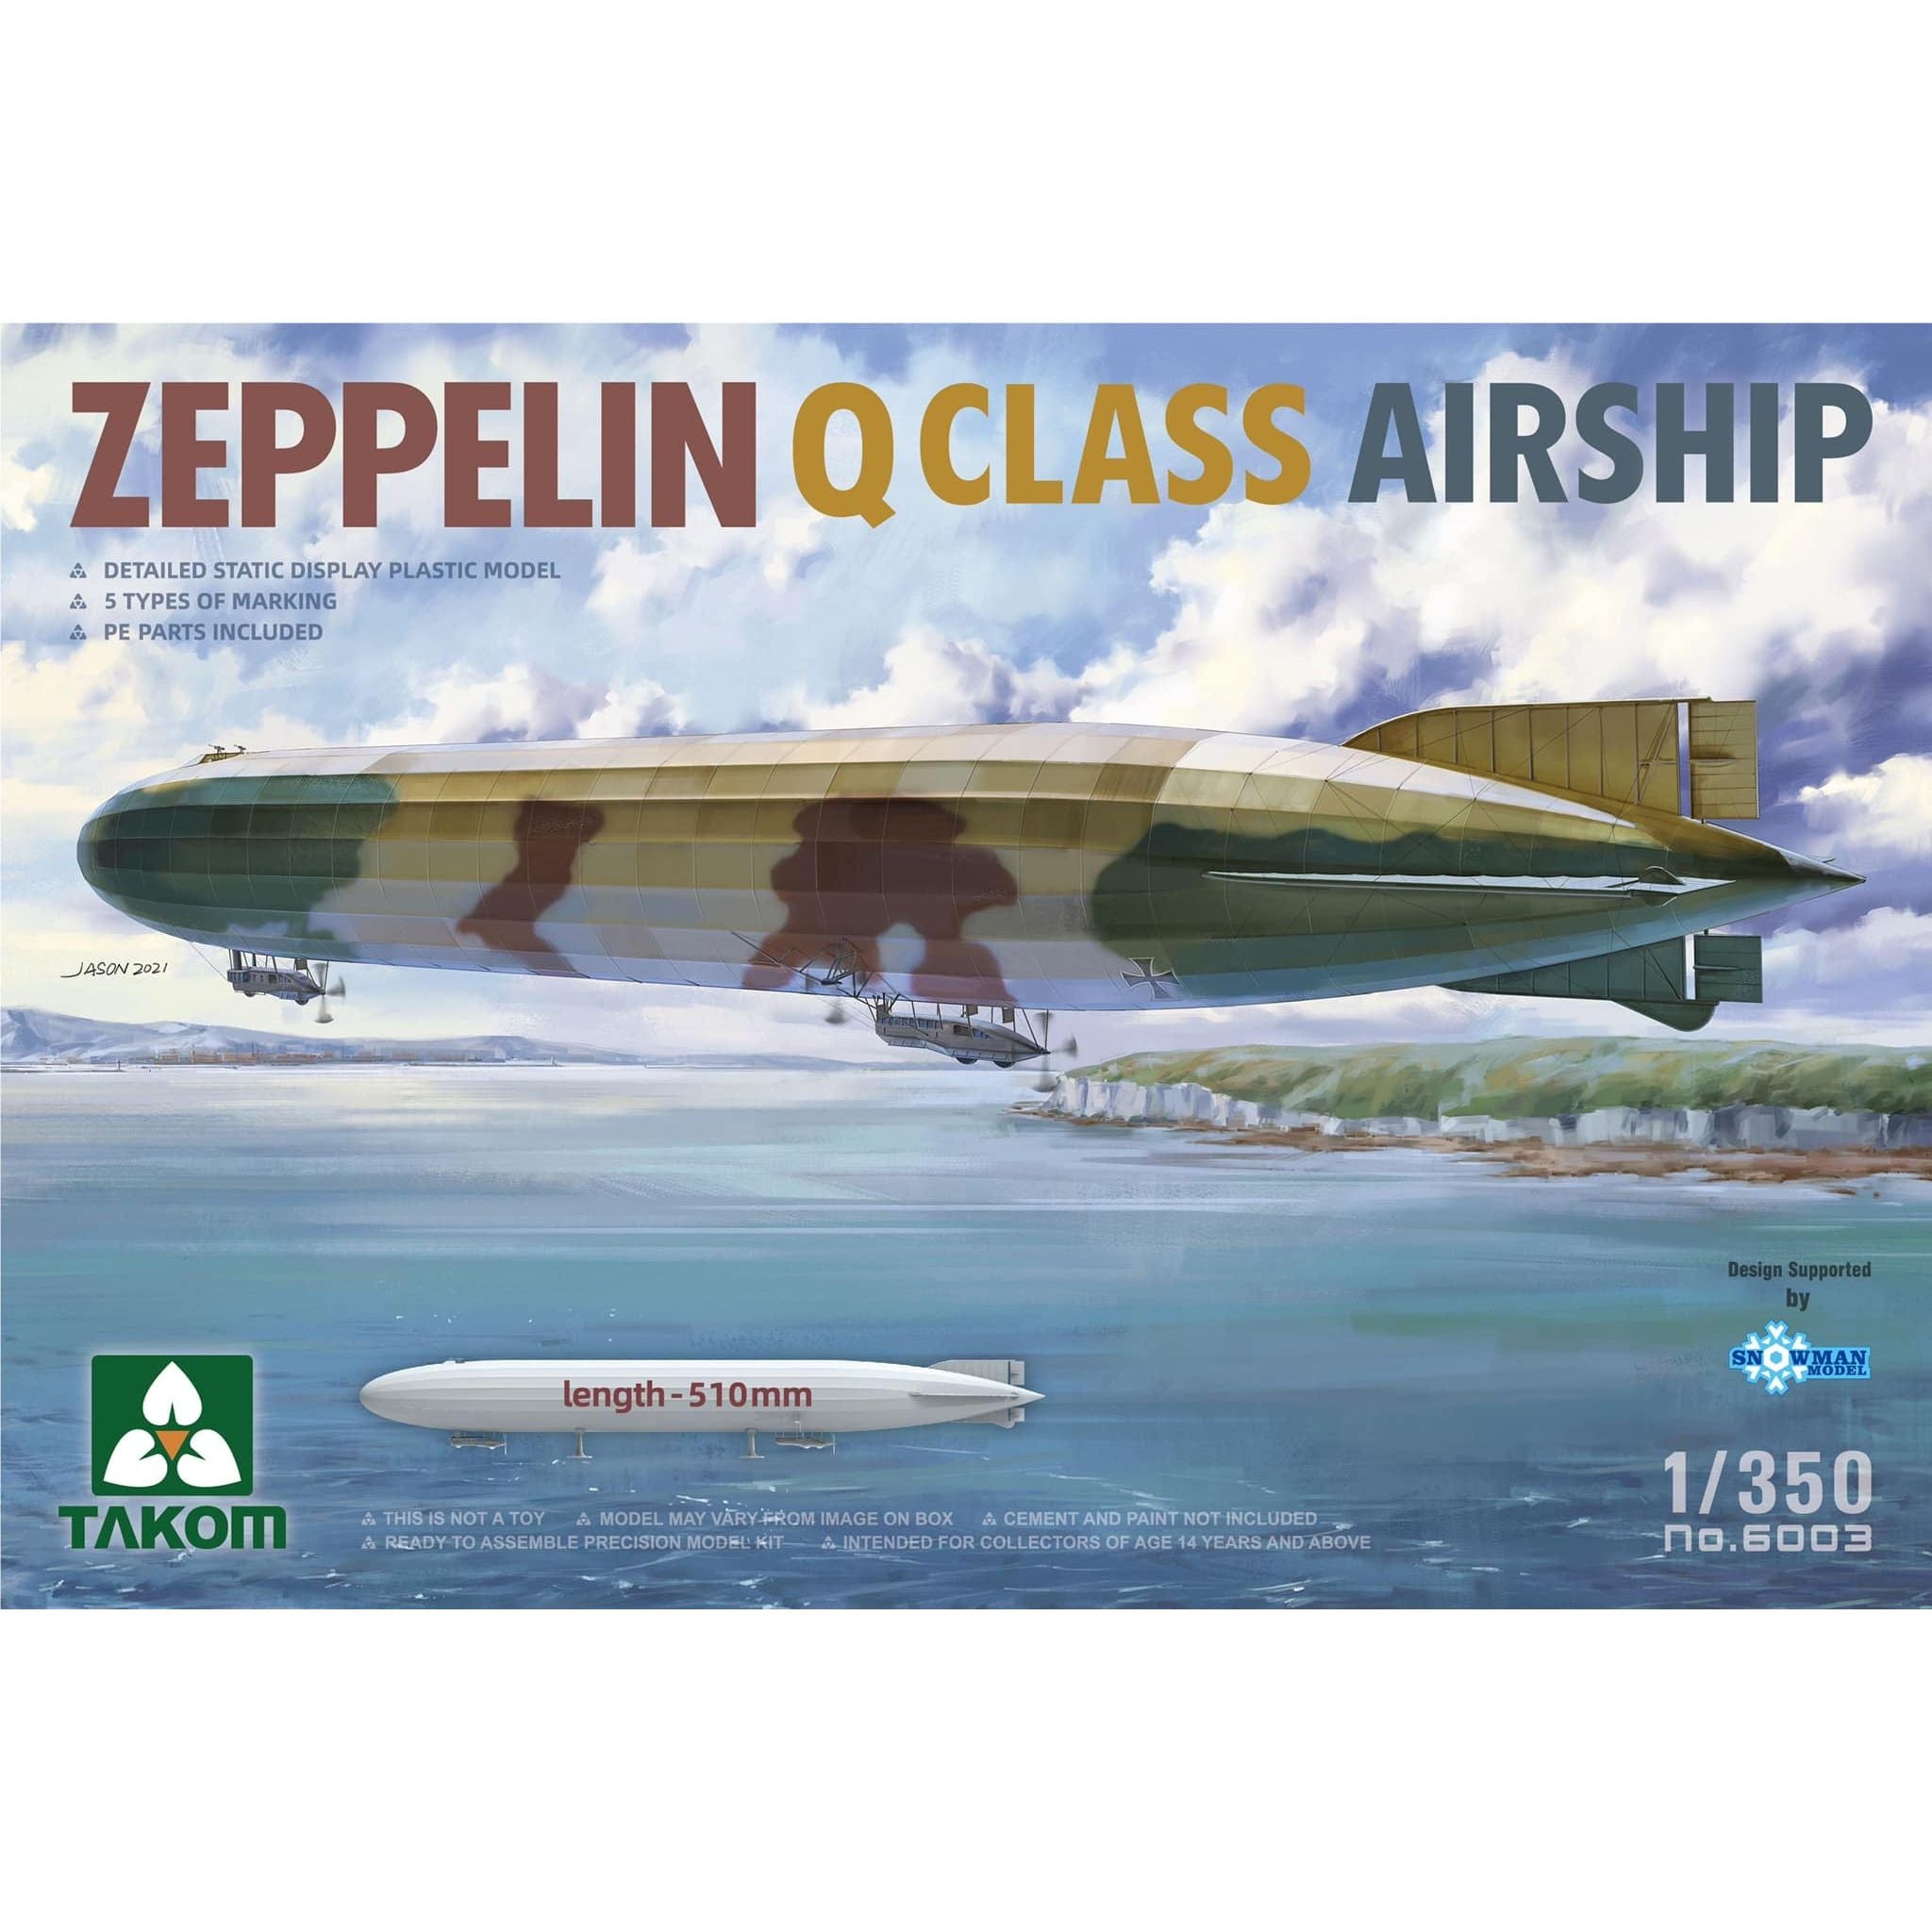 Zeppelin Q Class Airship 1/350 #3006 by Takom